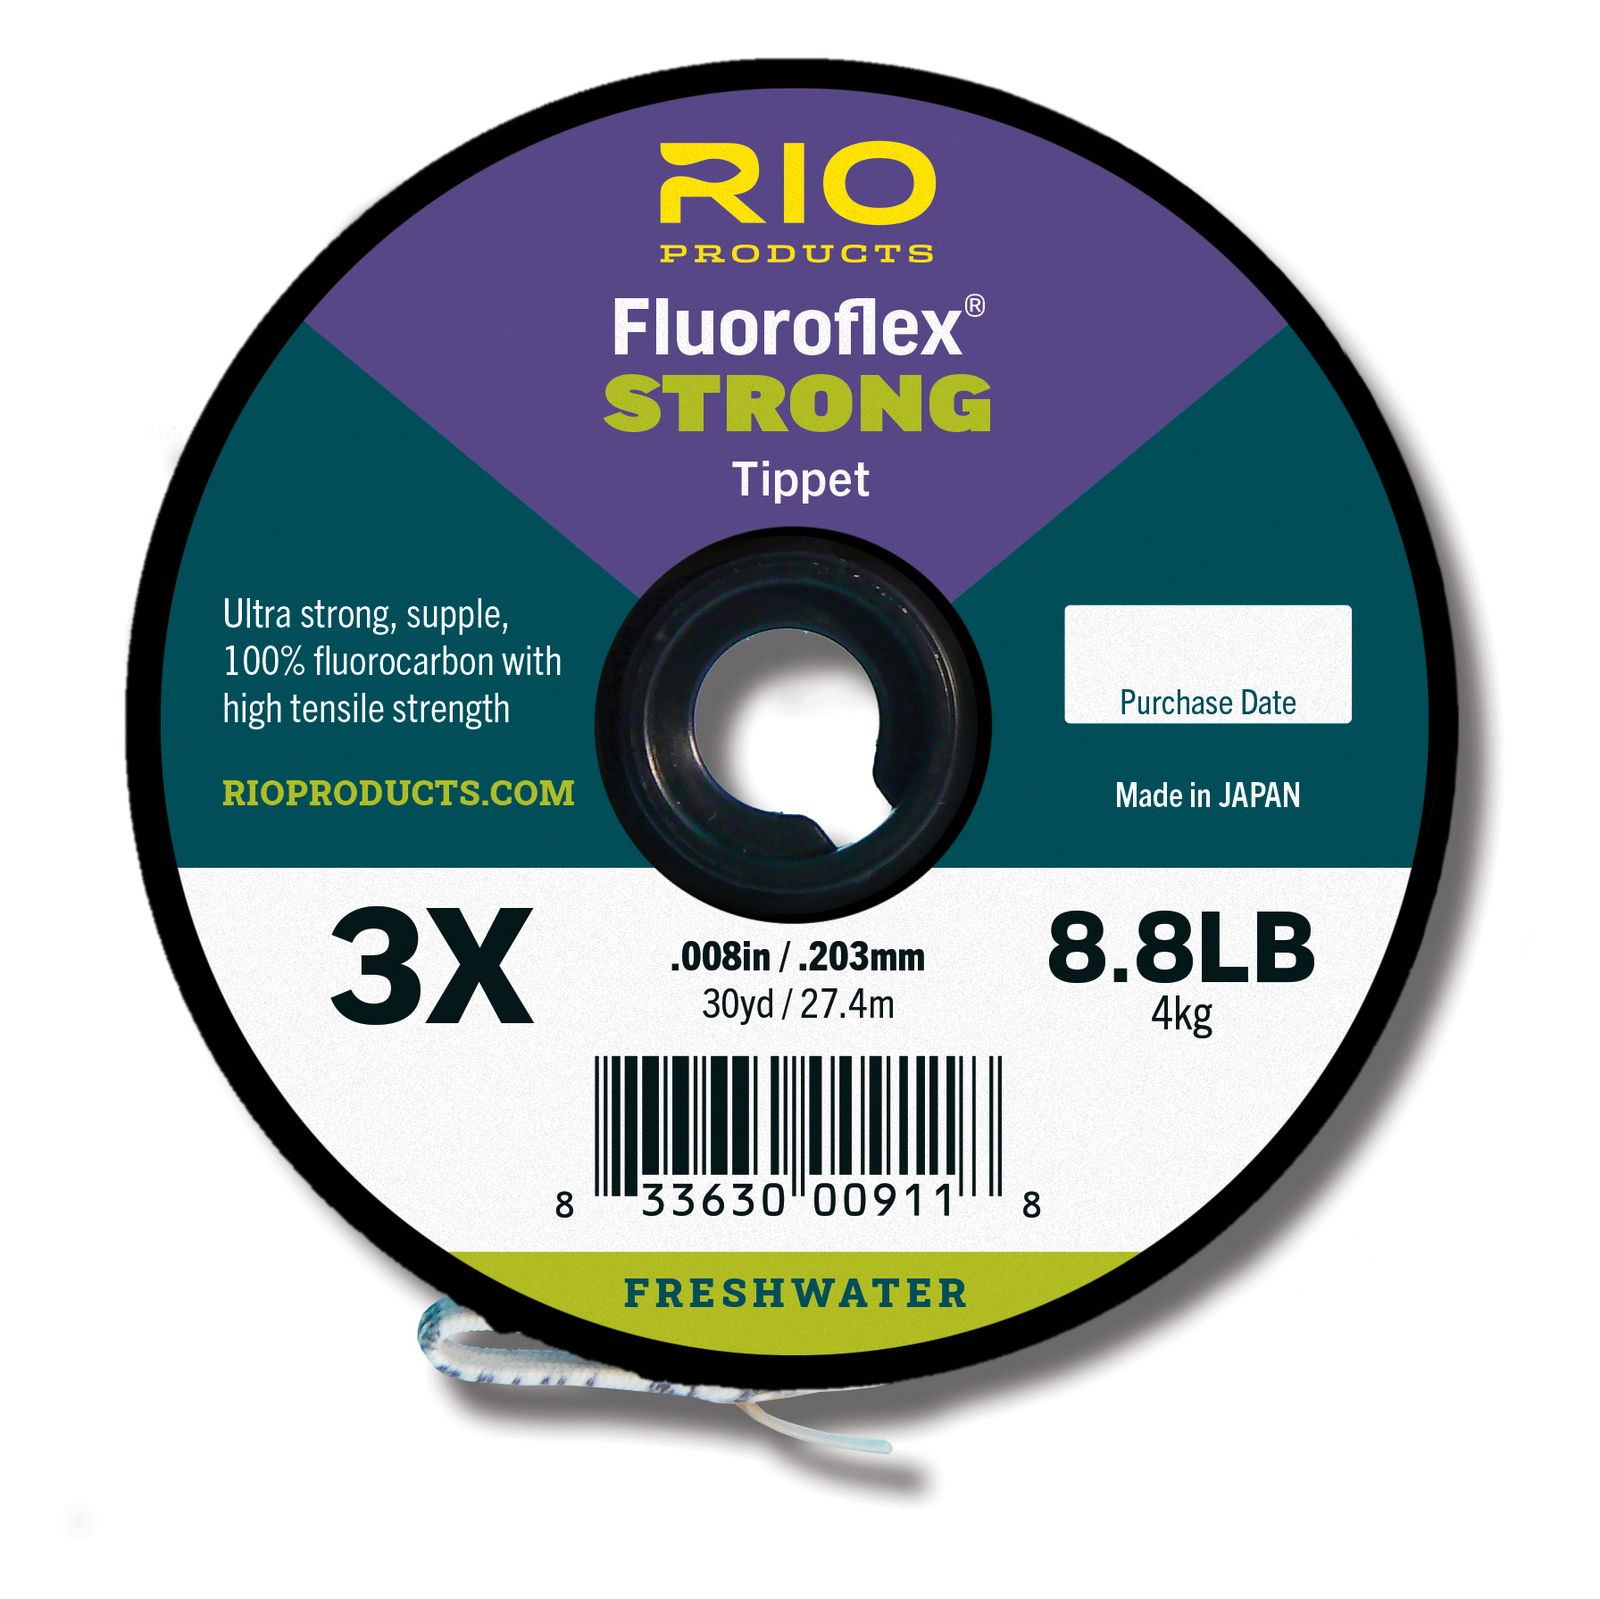 Rio Freshwater Fluoroflex Strong Tippet